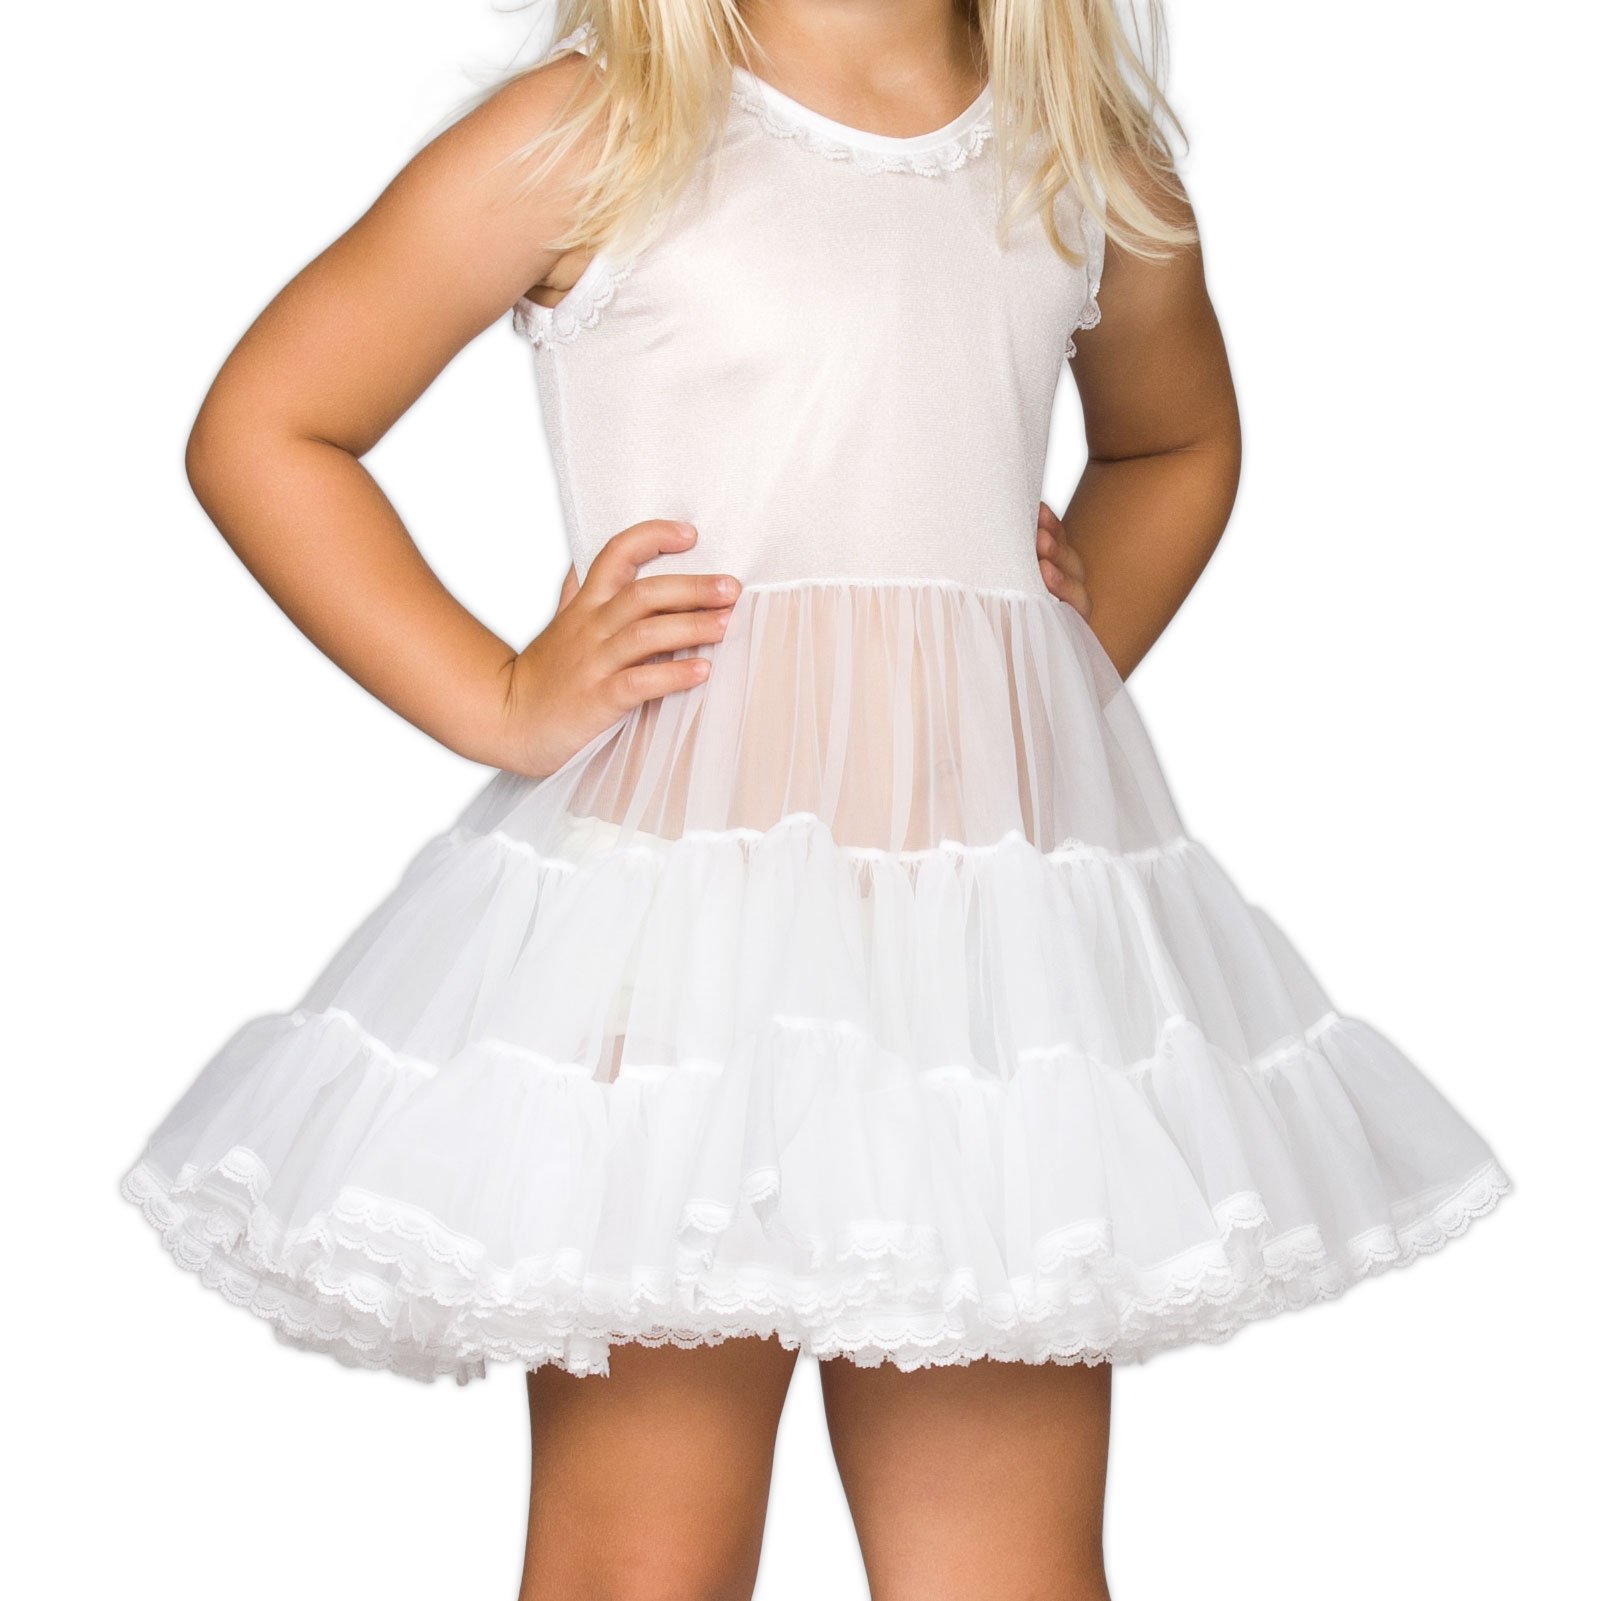 I.C. Collections Baby Girls White Bouffant Slip Petticoat, 6m - 24m